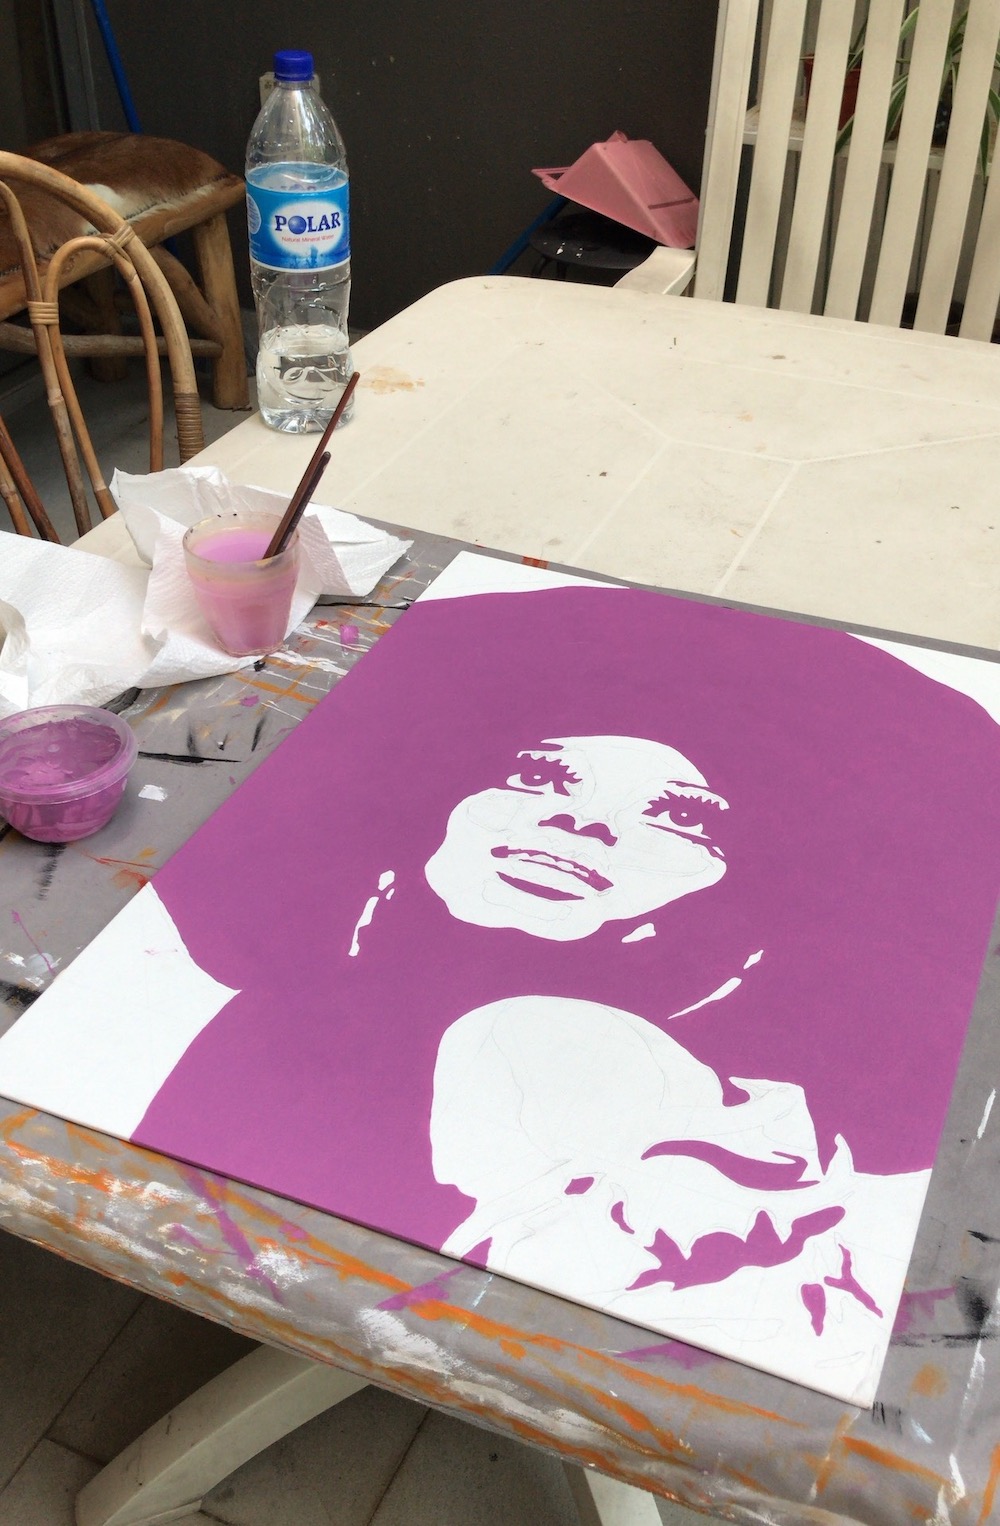 Diana Ross painting - work in progress | By Kerwin